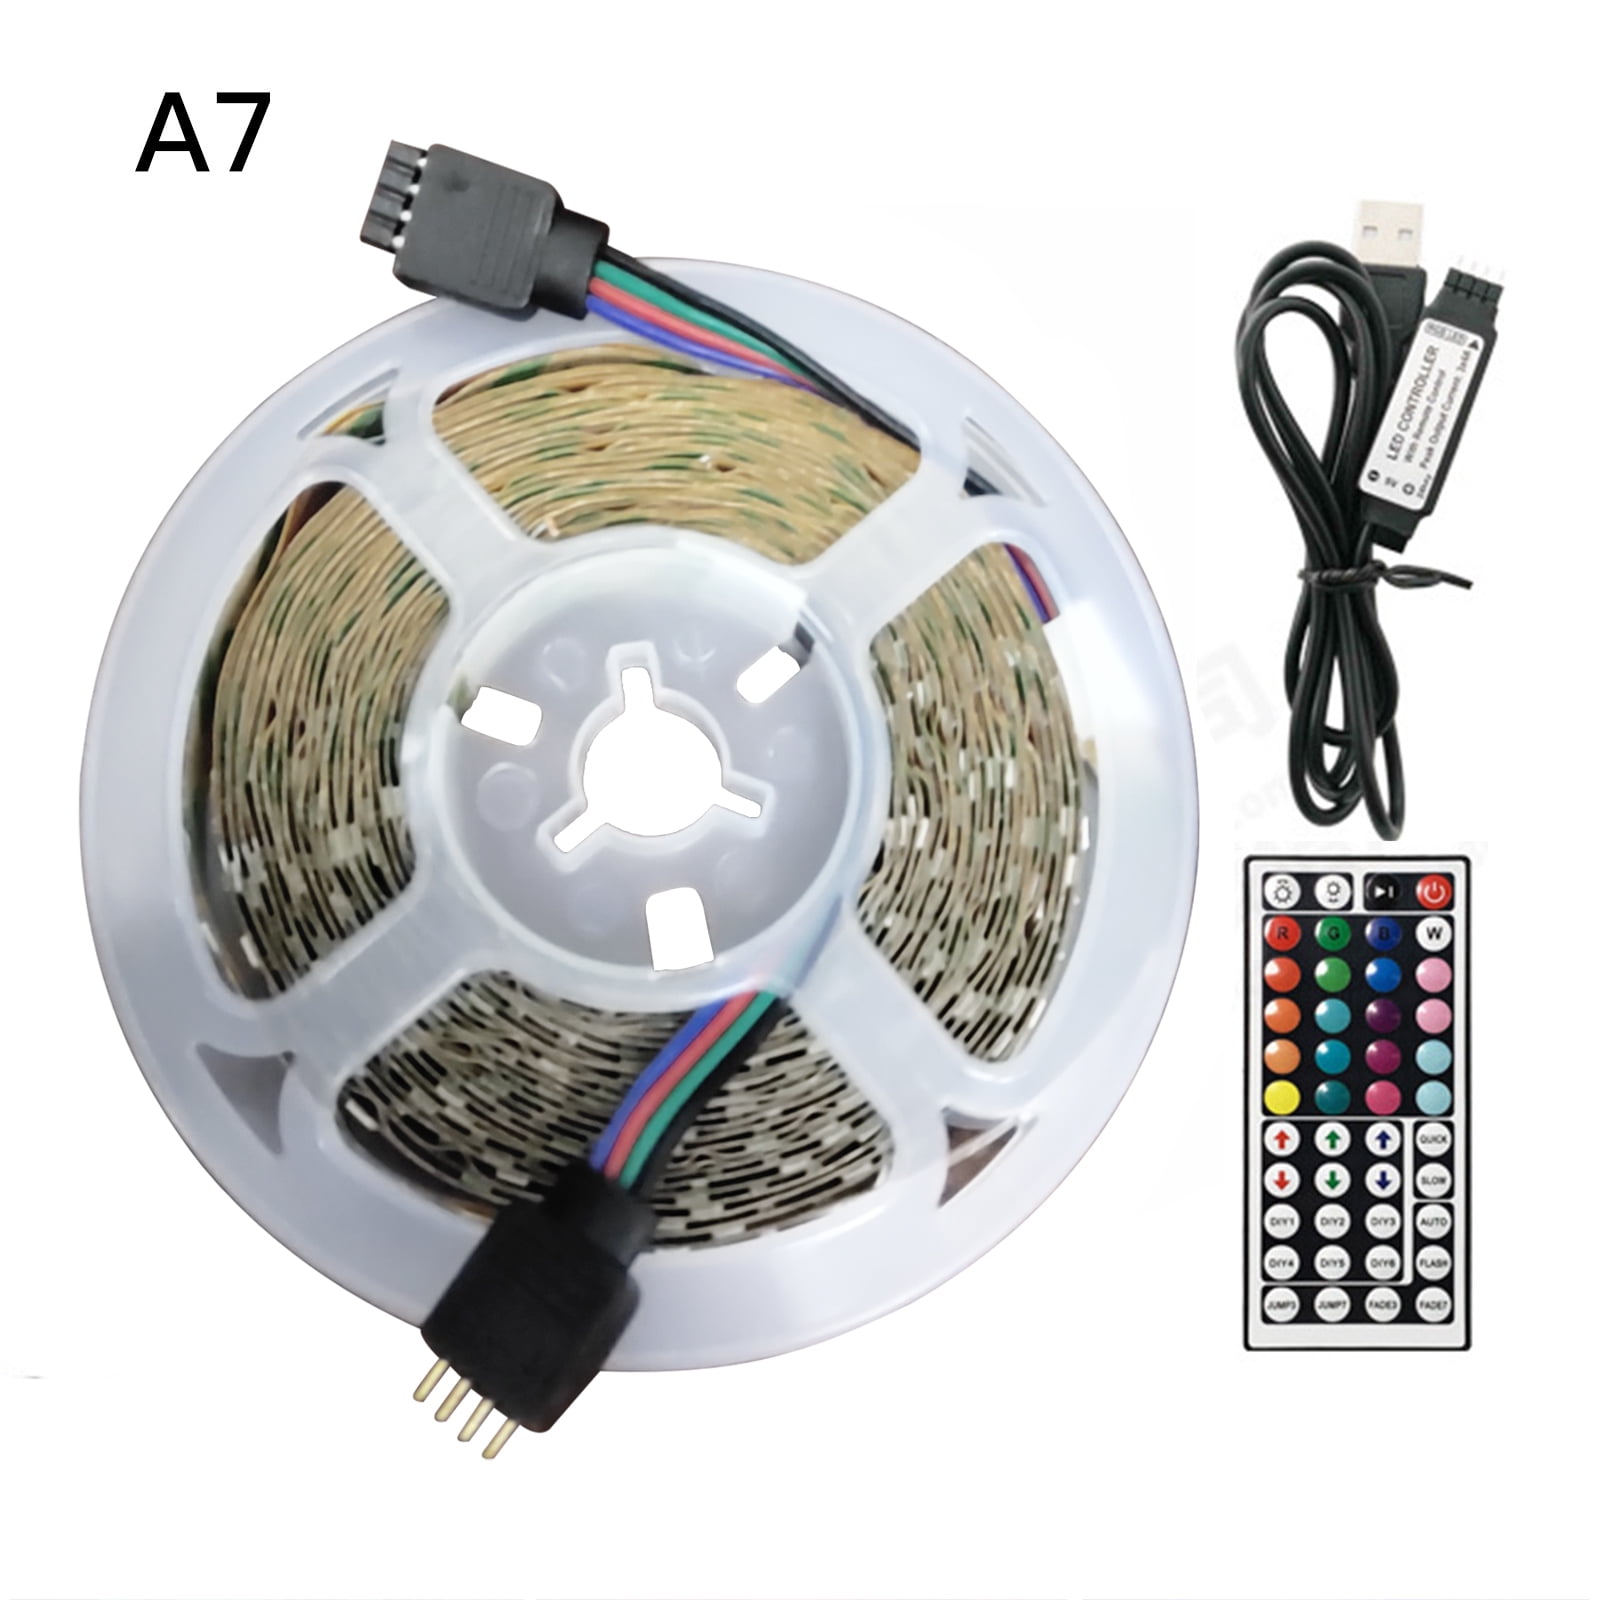 LED Strip Lights Luminous String Backlight 5M USB For Room/bedroom/party Bluetooth WIFI Controller RGB Walmart.com